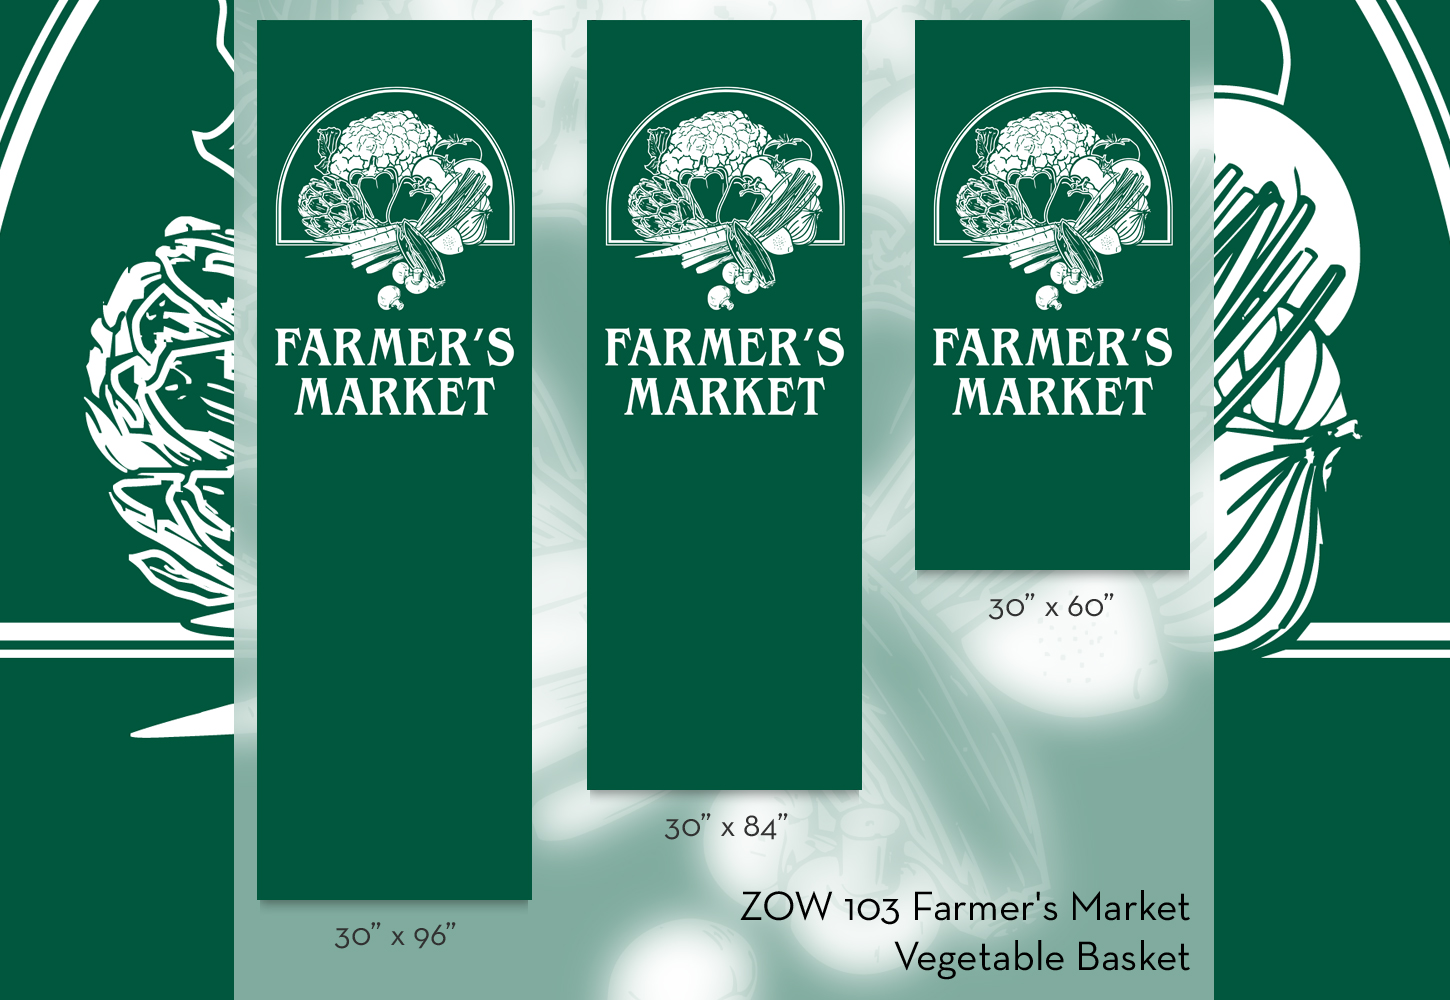 ZOW 103 Farmer's Market Vegetable Basket